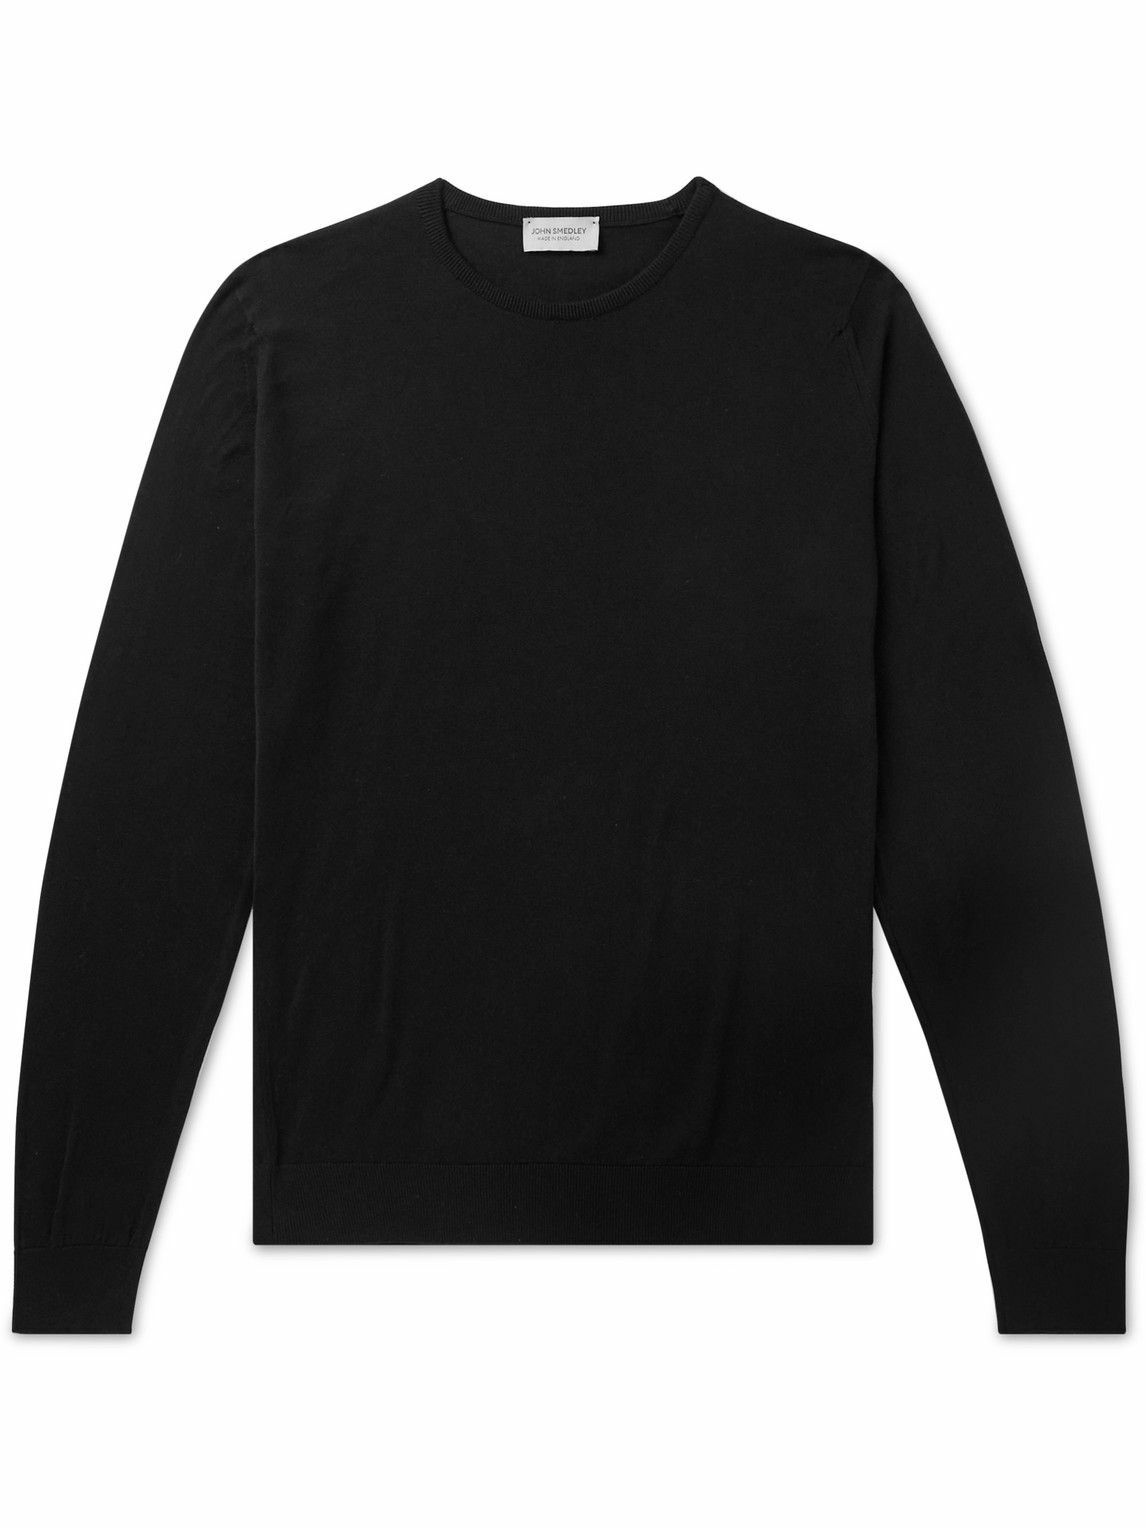 John Smedley - Sea Island Cotton Sweater - Black John Smedley